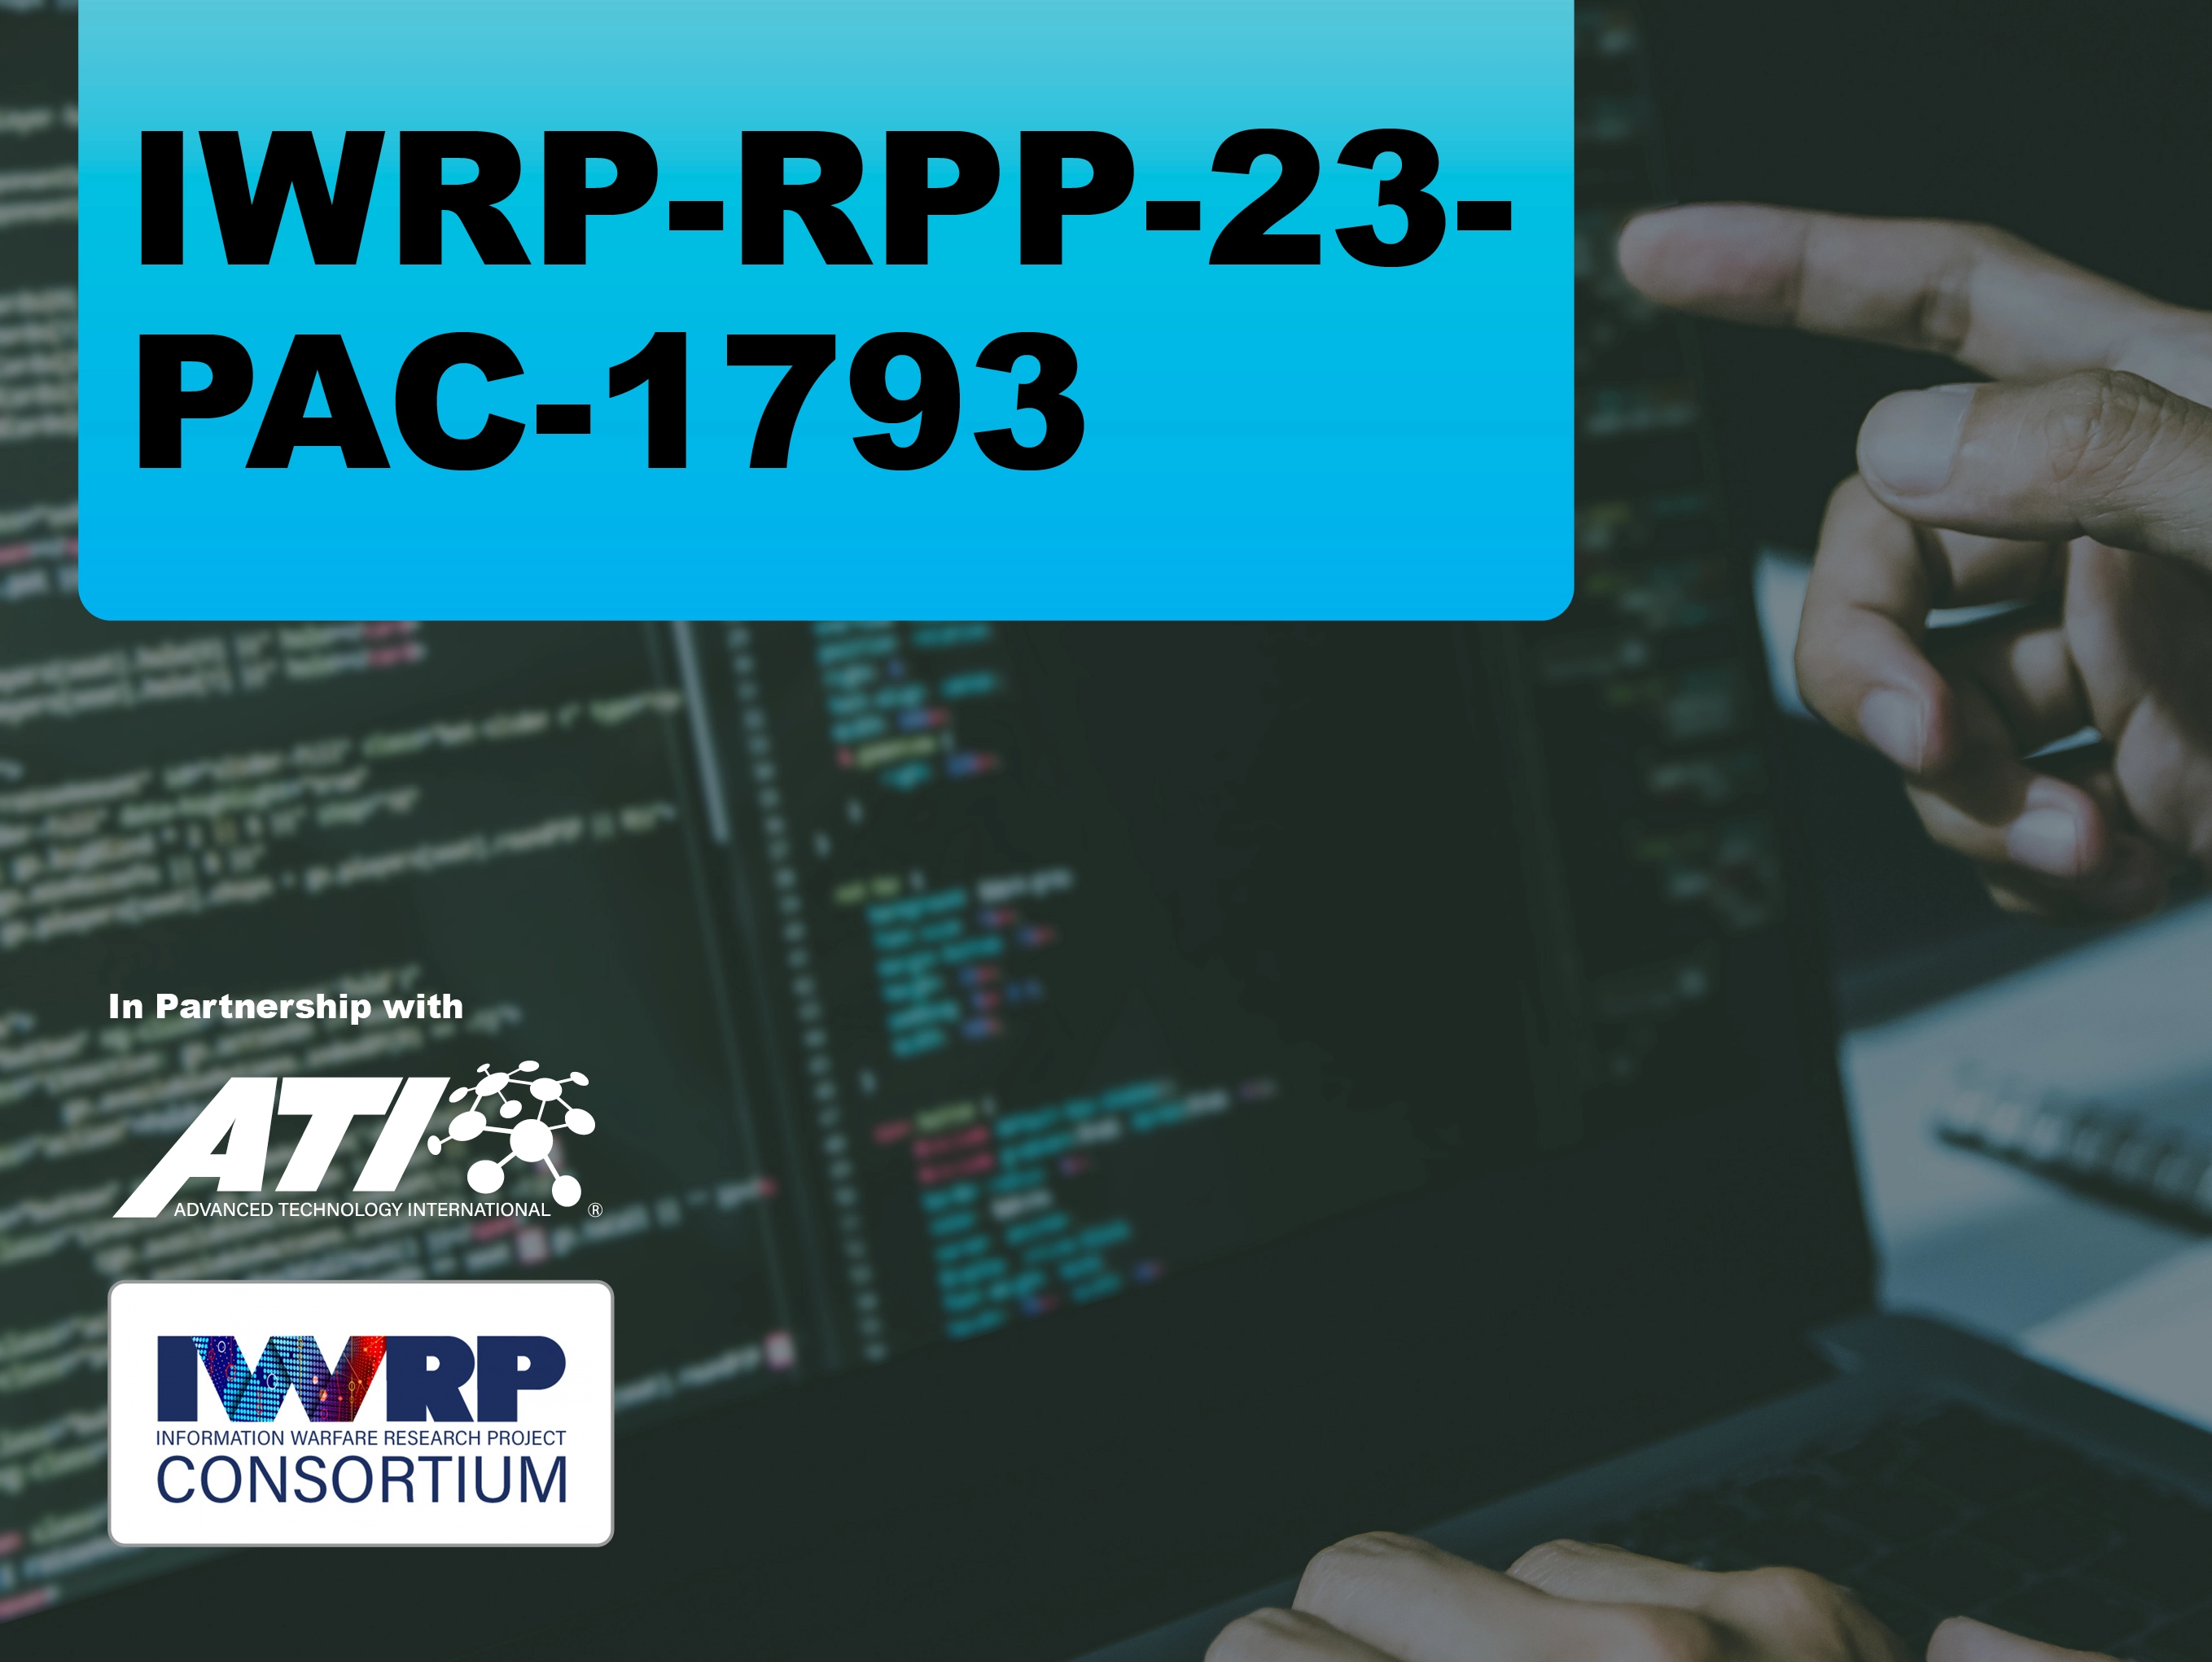 IWRP-RPP-23-PAC-1793